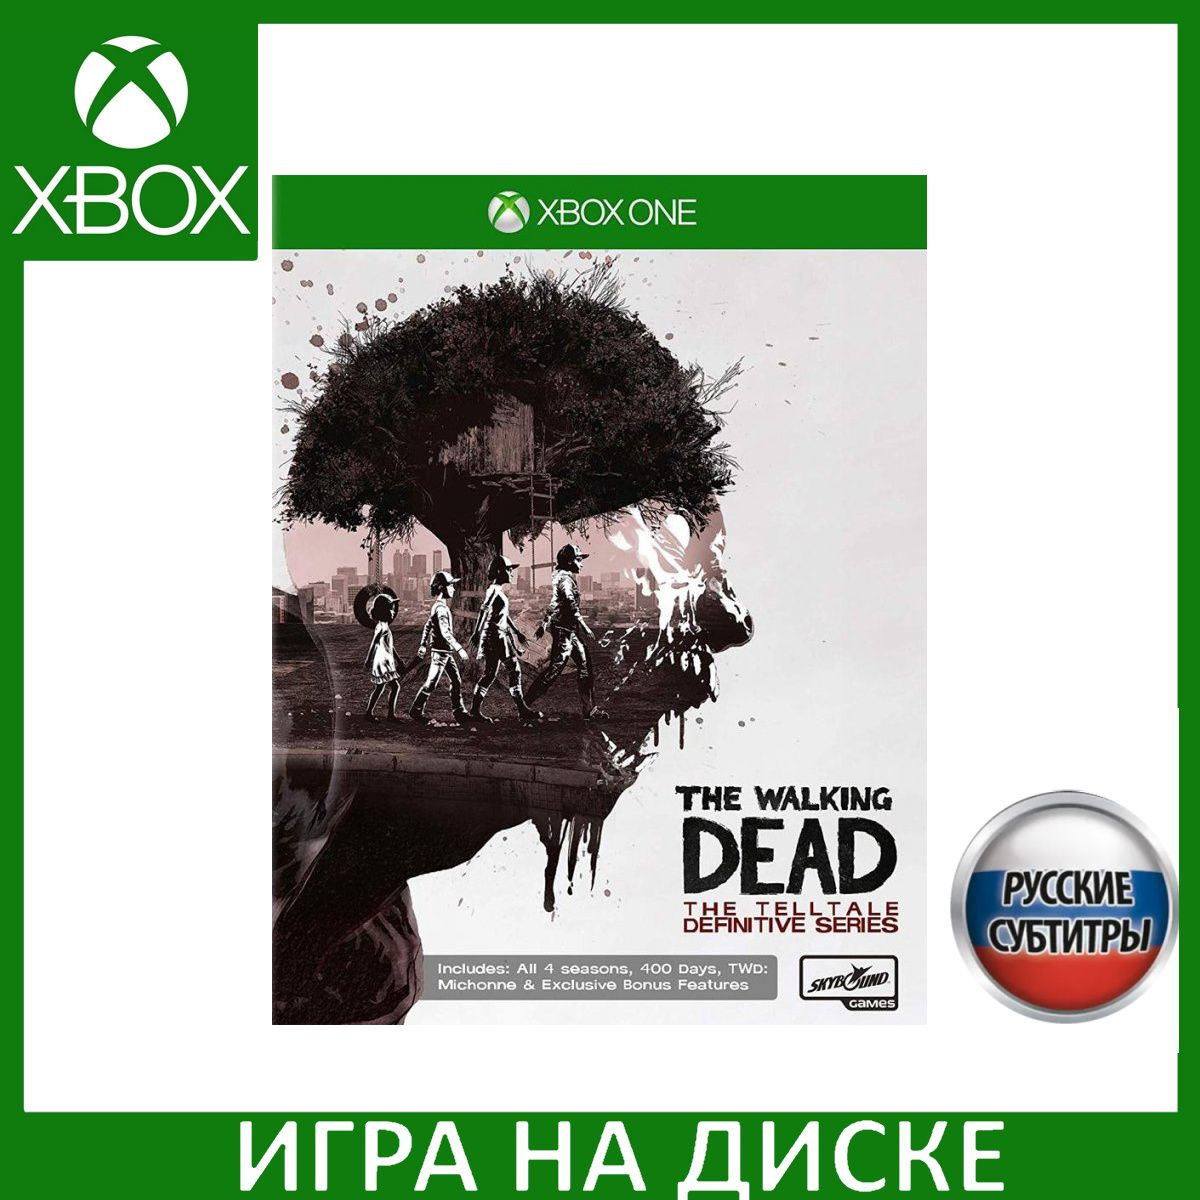 Игра на Диске The Walking Dead (Ходячие мертвецы): The Telltale Definitive Series Русская версия (Xbox One)